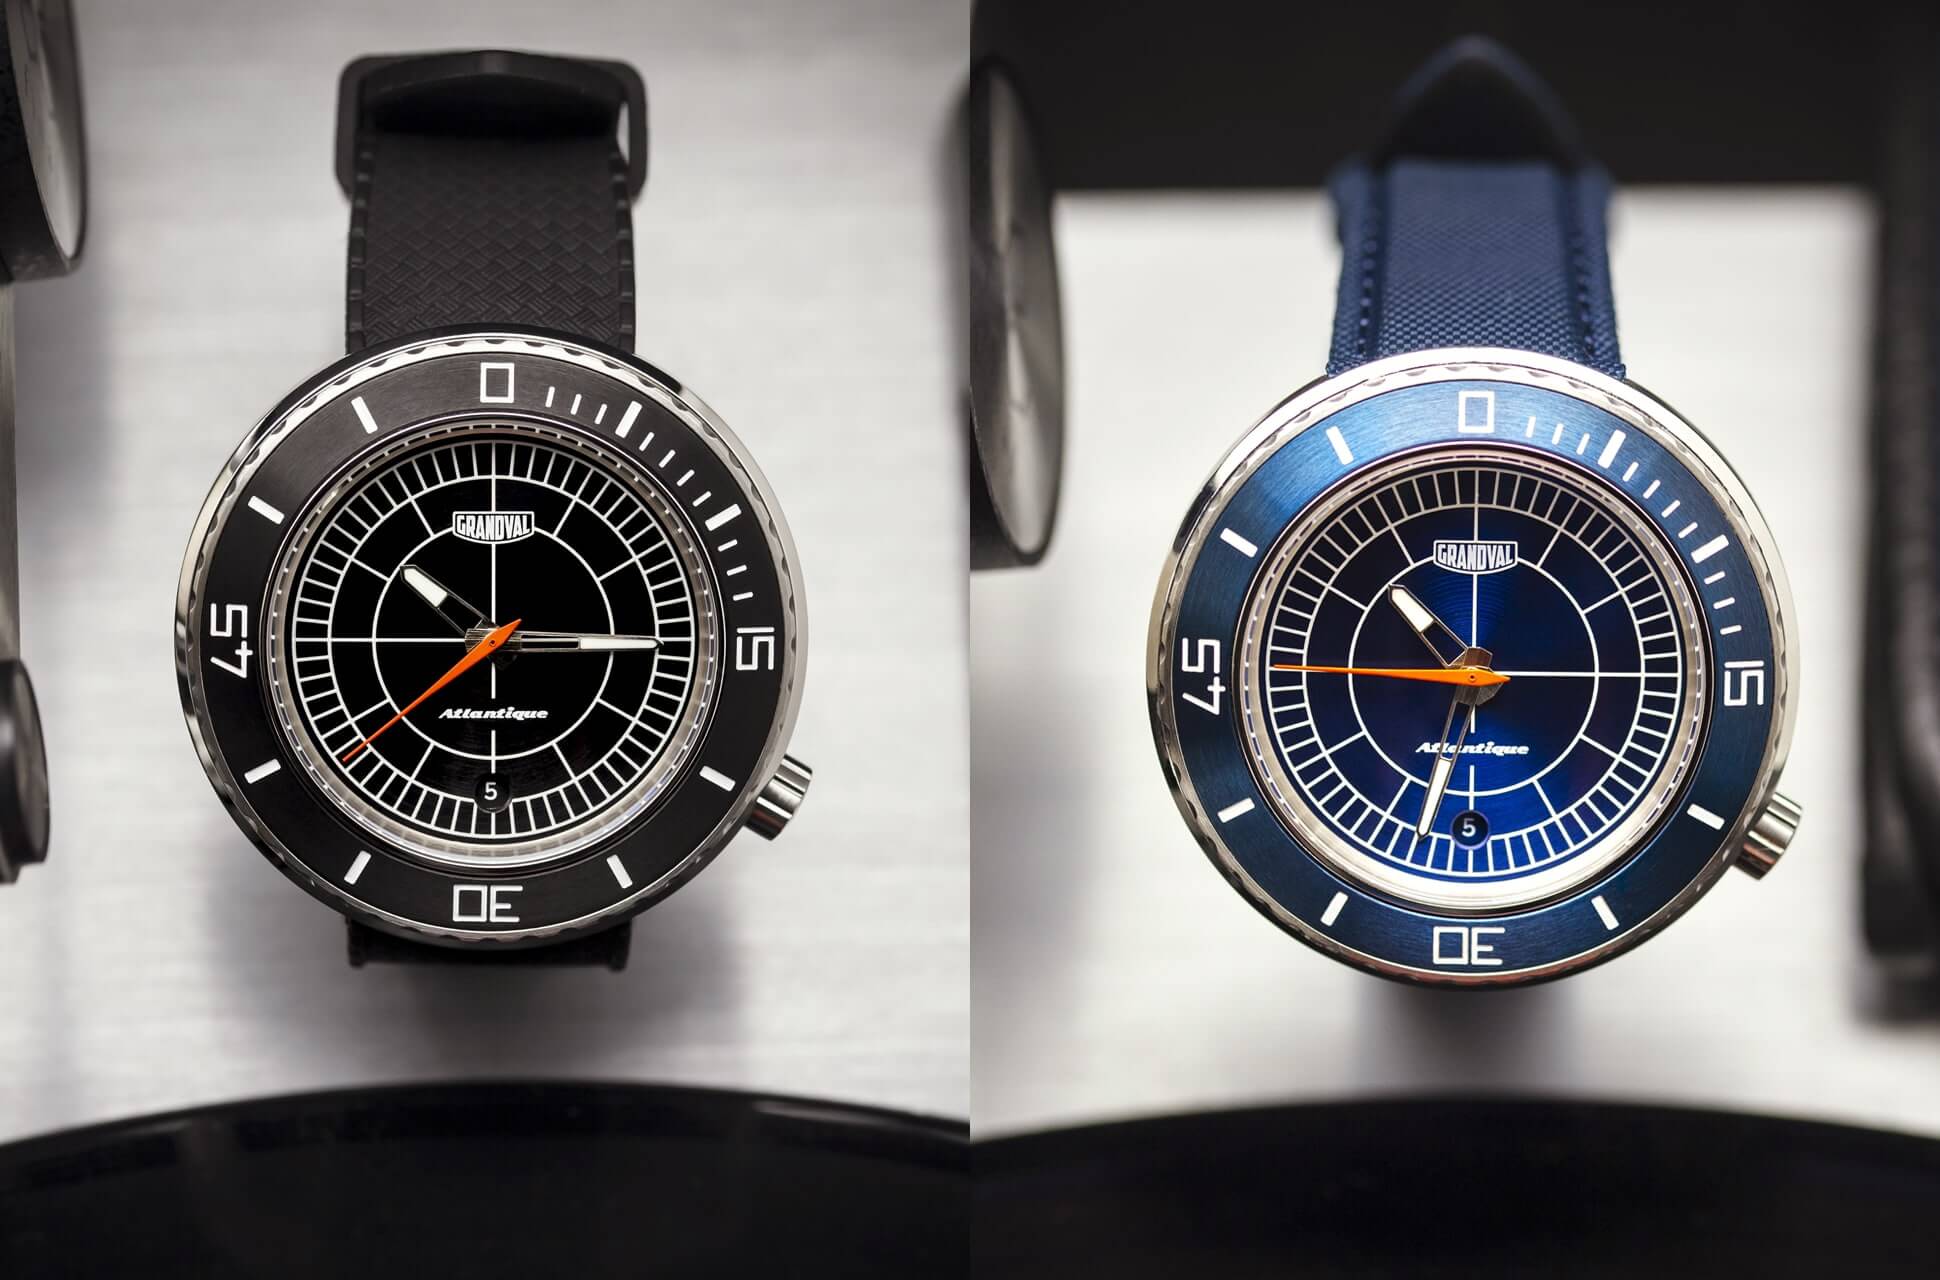 Lancement Kickstarter des montres Grandval